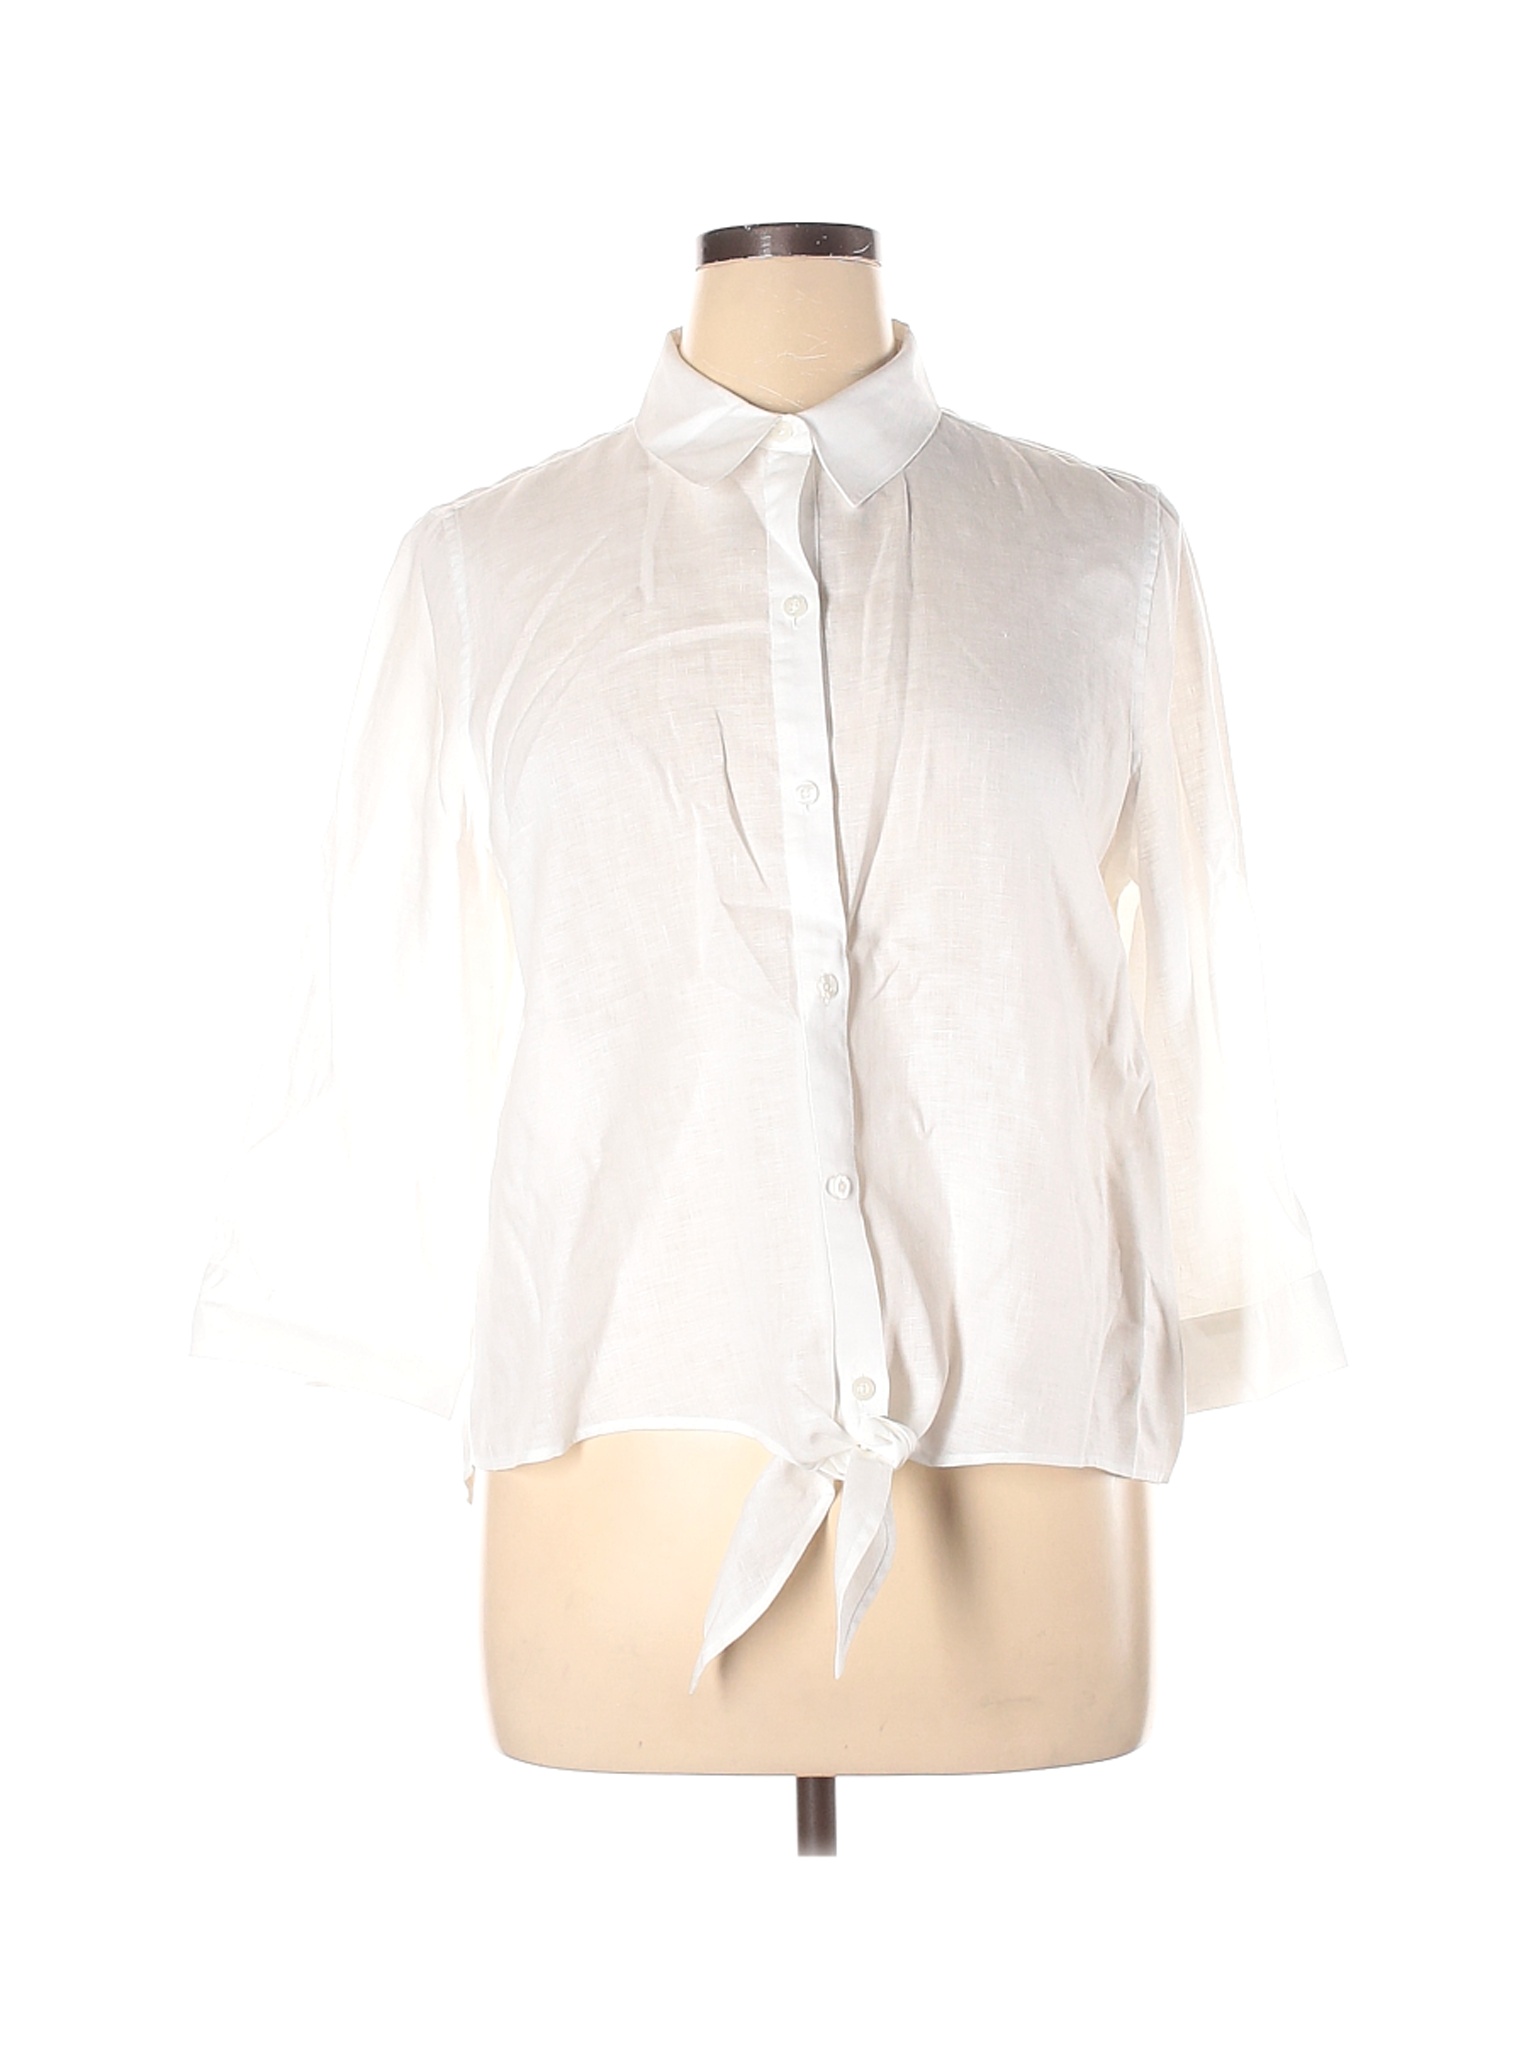 Chico's Women White 3/4 Sleeve Blouse XL | eBay